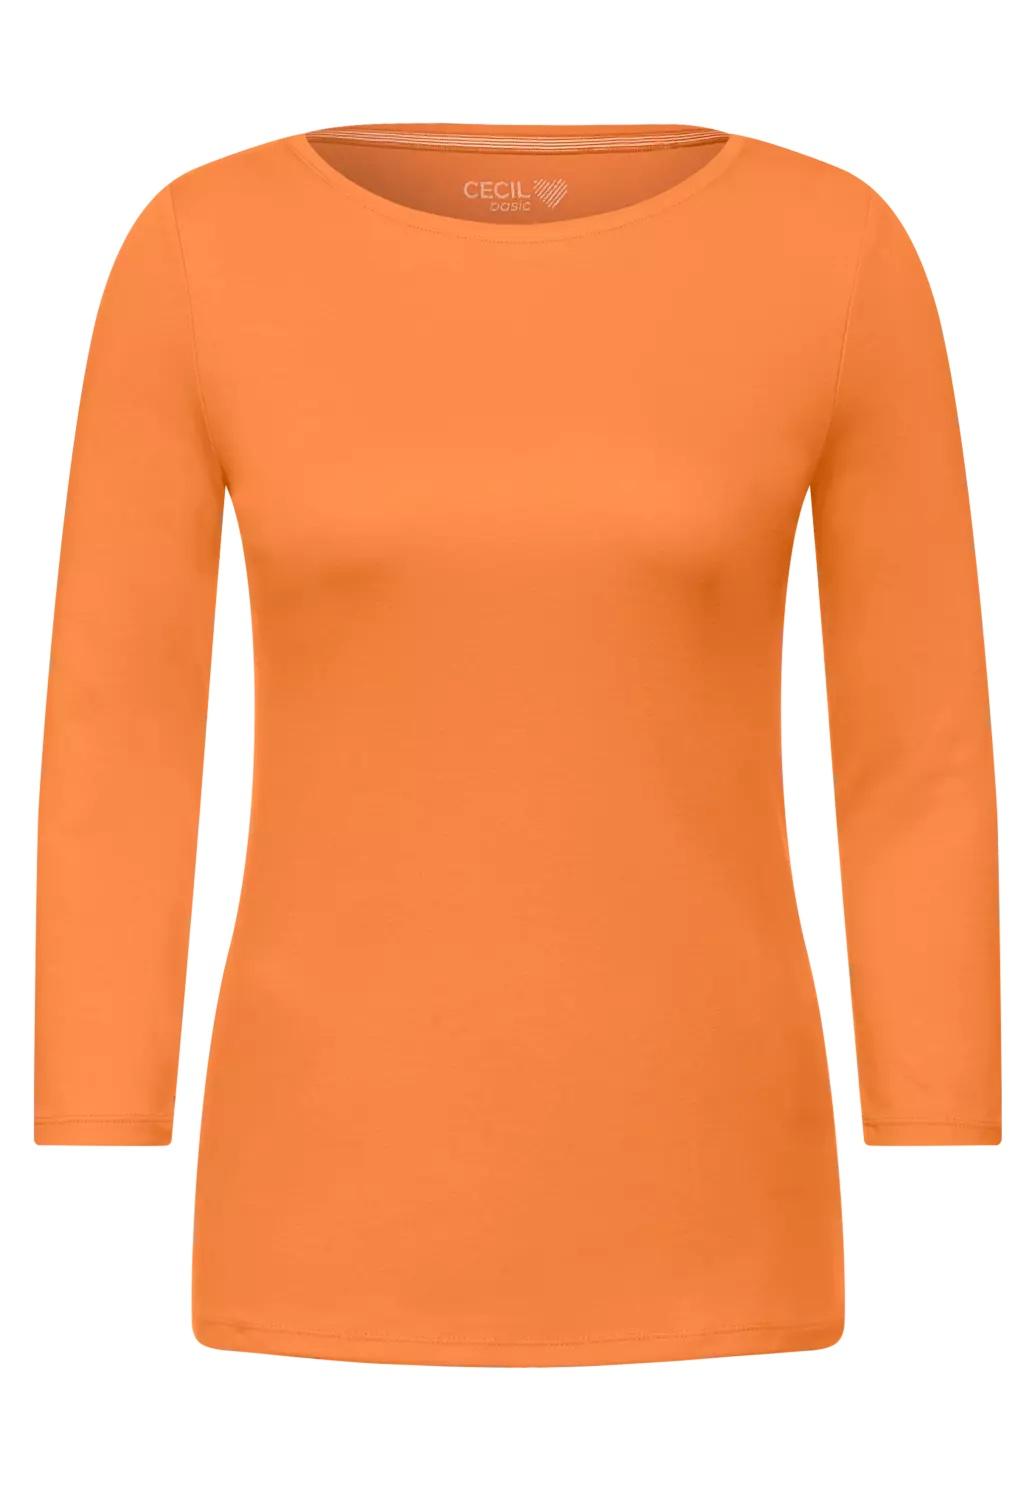 CECIL basic tričko, oran.